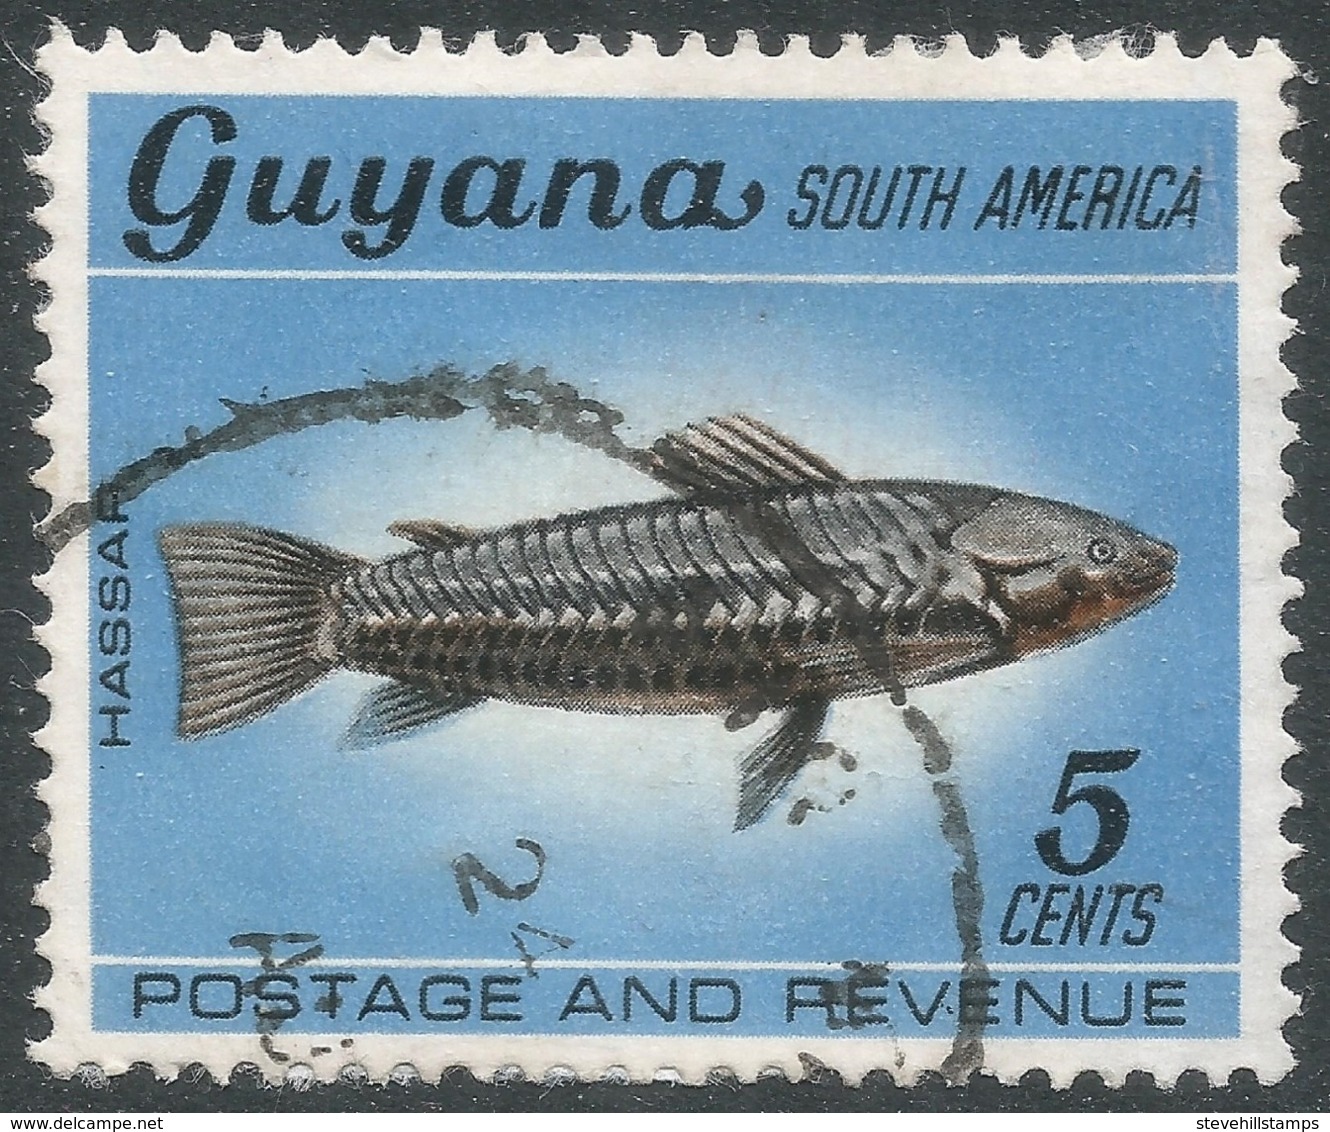 Guyana. 1968 Definitives. 5c Used. SG 451 - Guyana (1966-...)